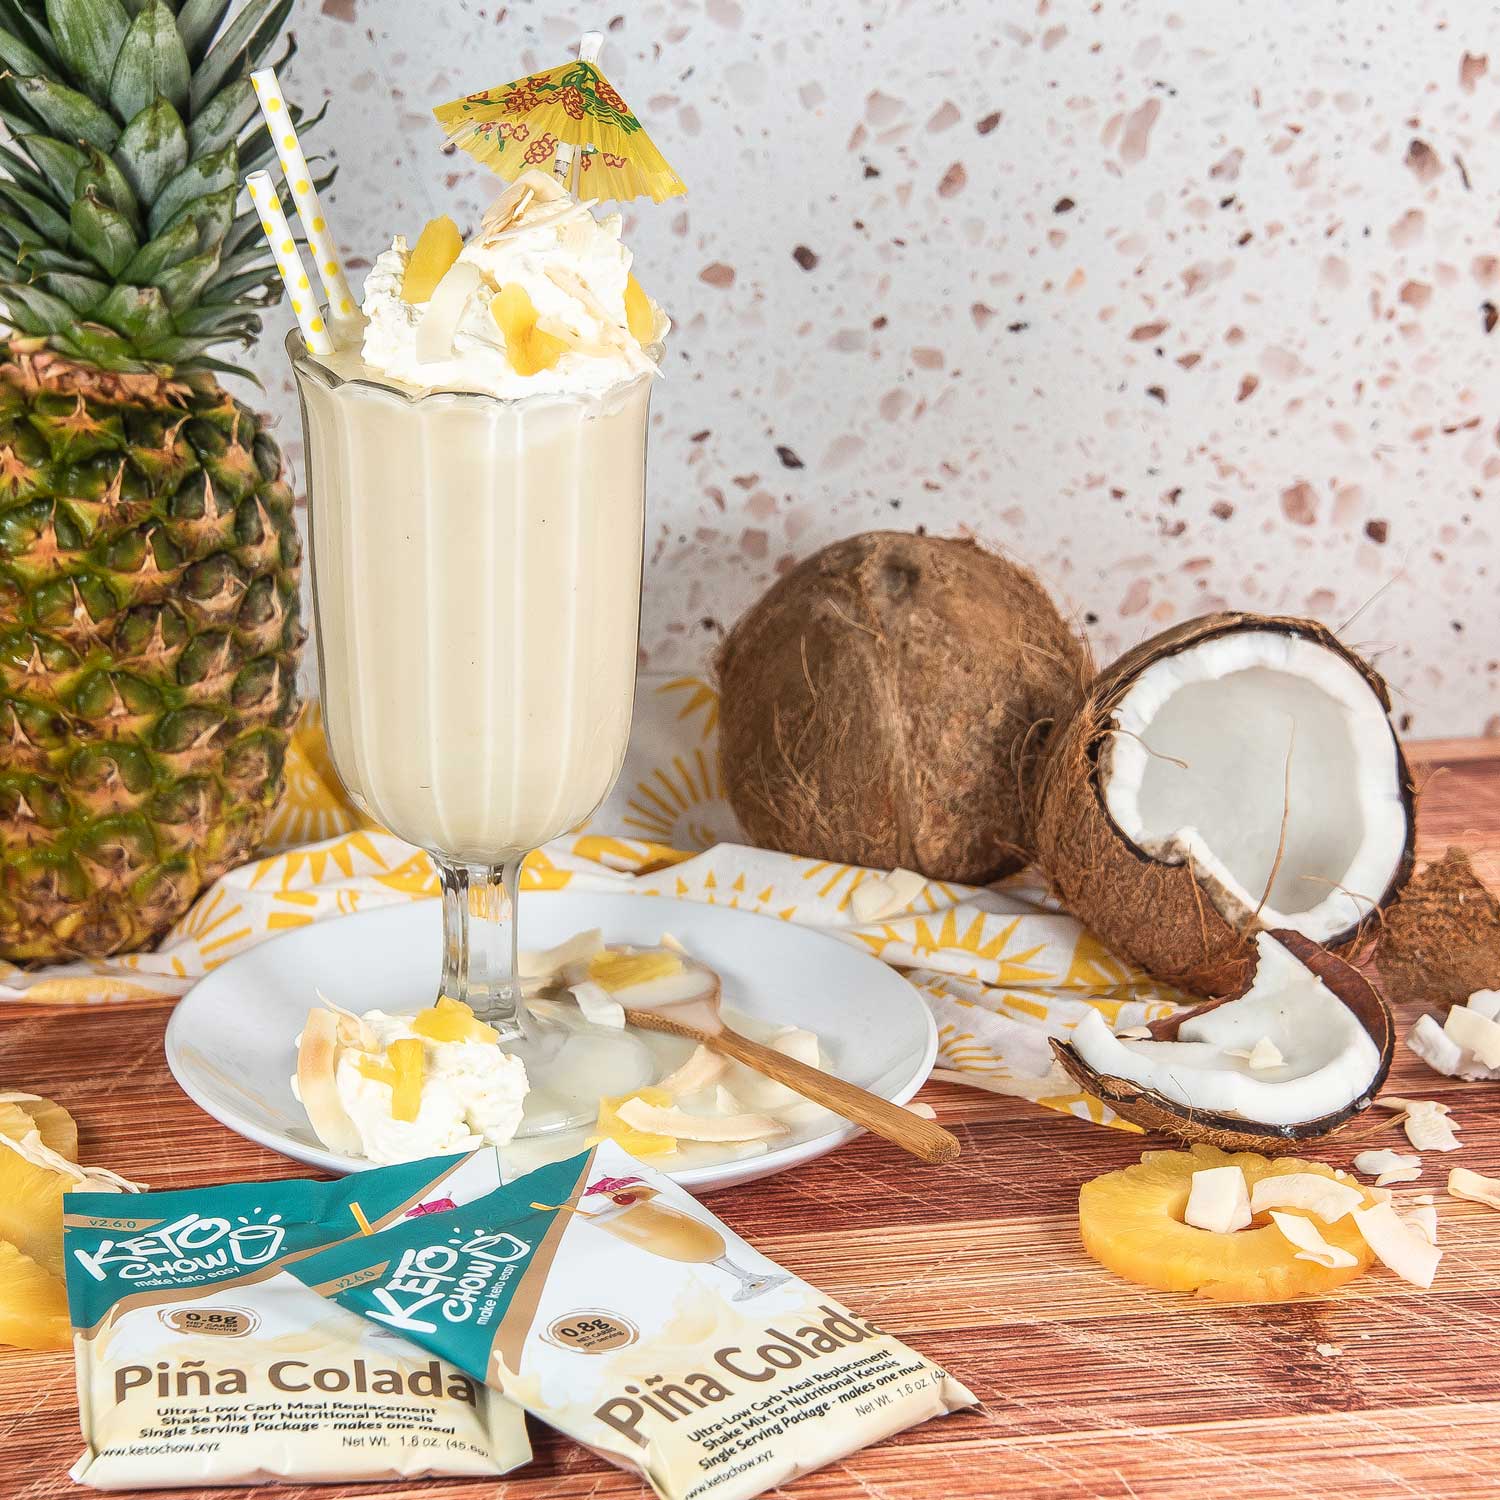  Pina Colada Keto Chow shake with coconut and pineapple around it